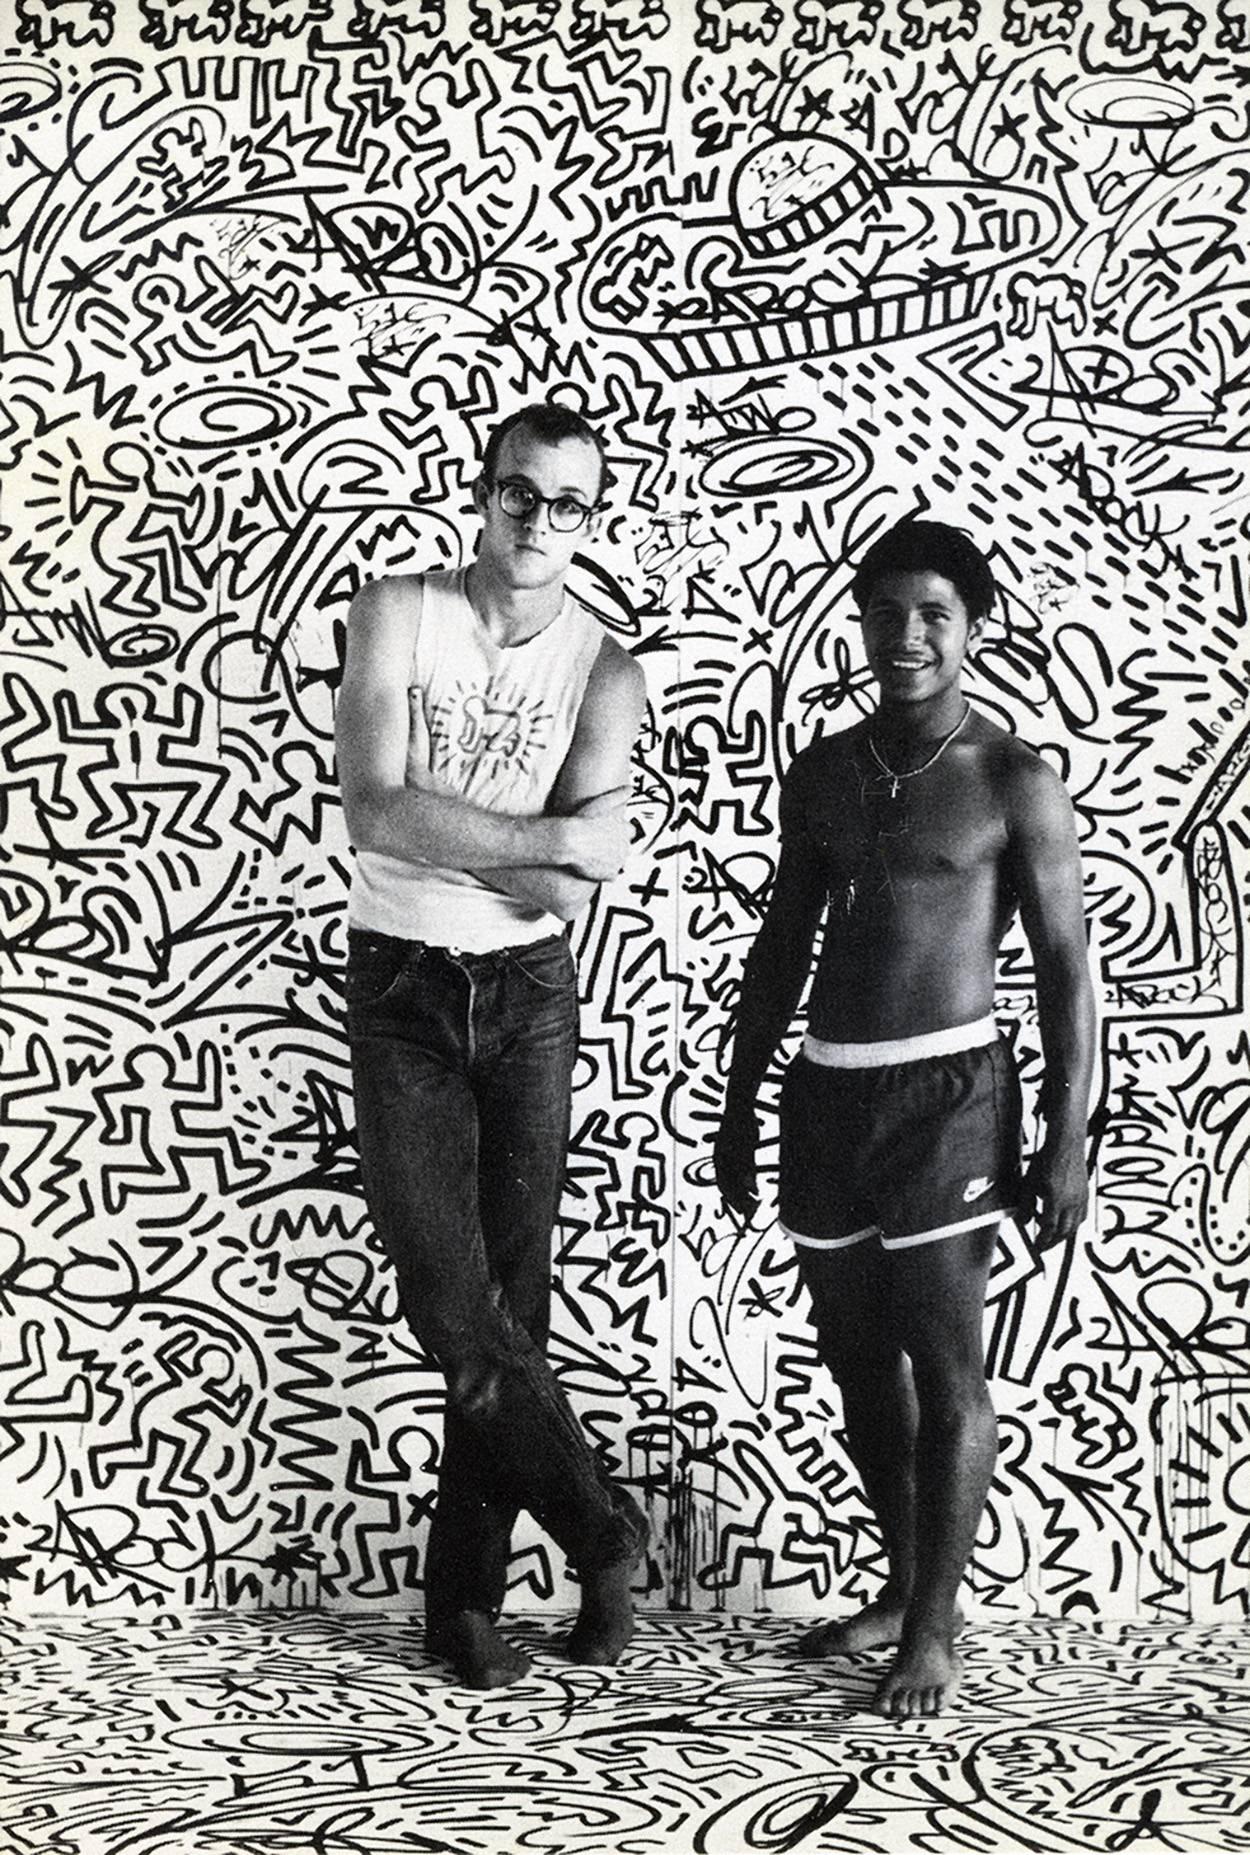 Keith Haring with LA2 (Keith Haring Tony Shafrazi announcement 1982)  - Print by Tseng Kwong Chi